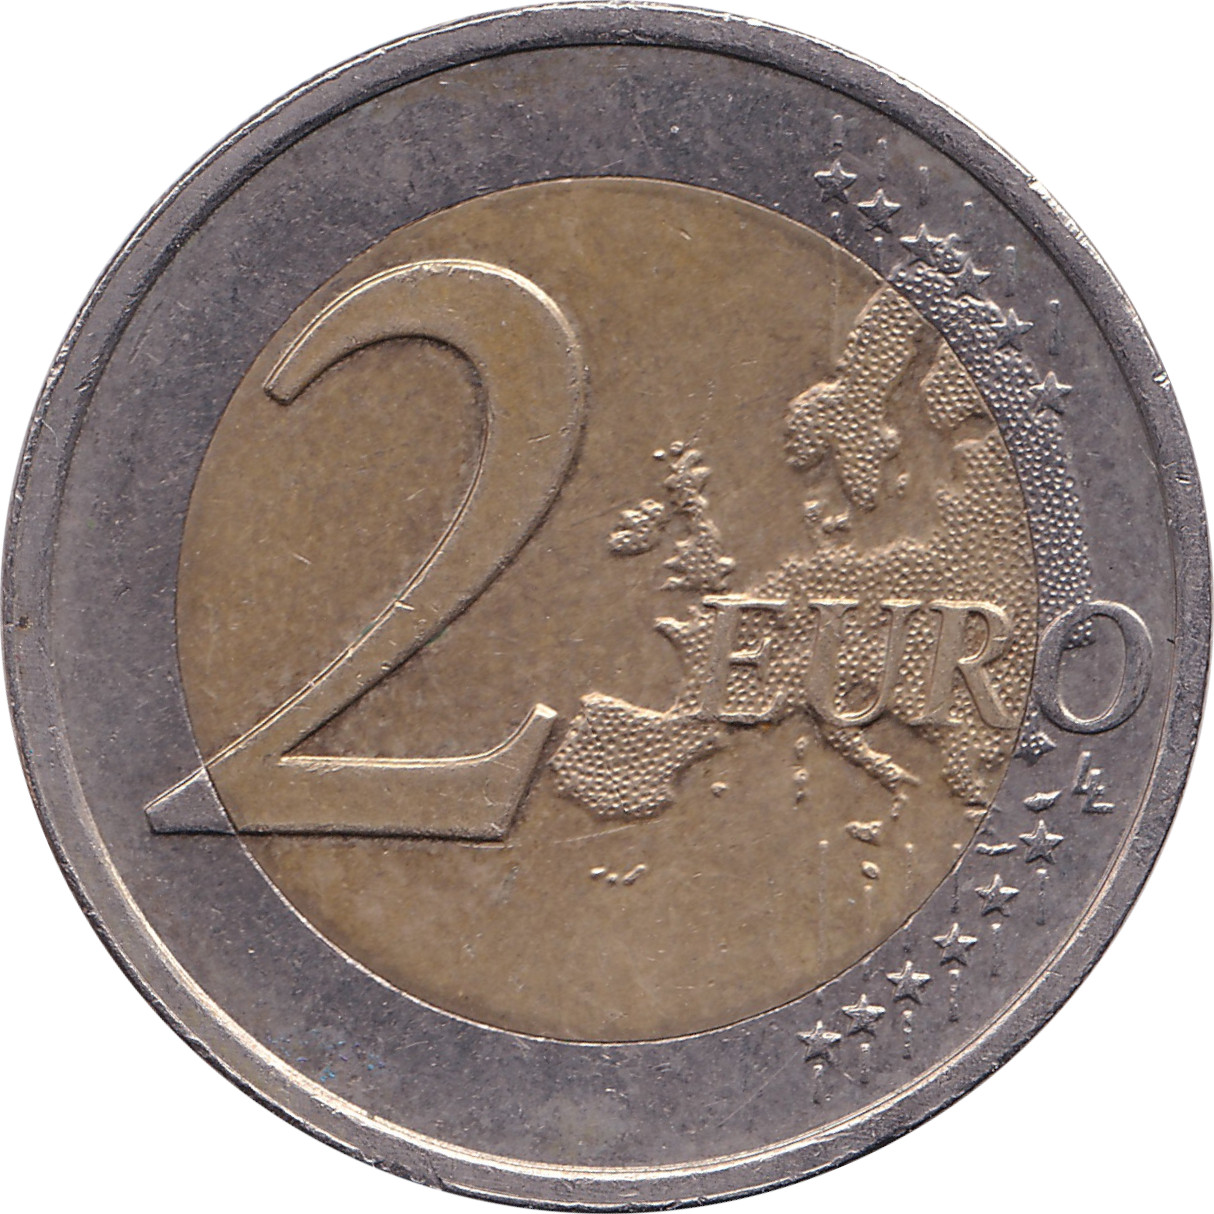 2 euro - Drapeau européen - Malte